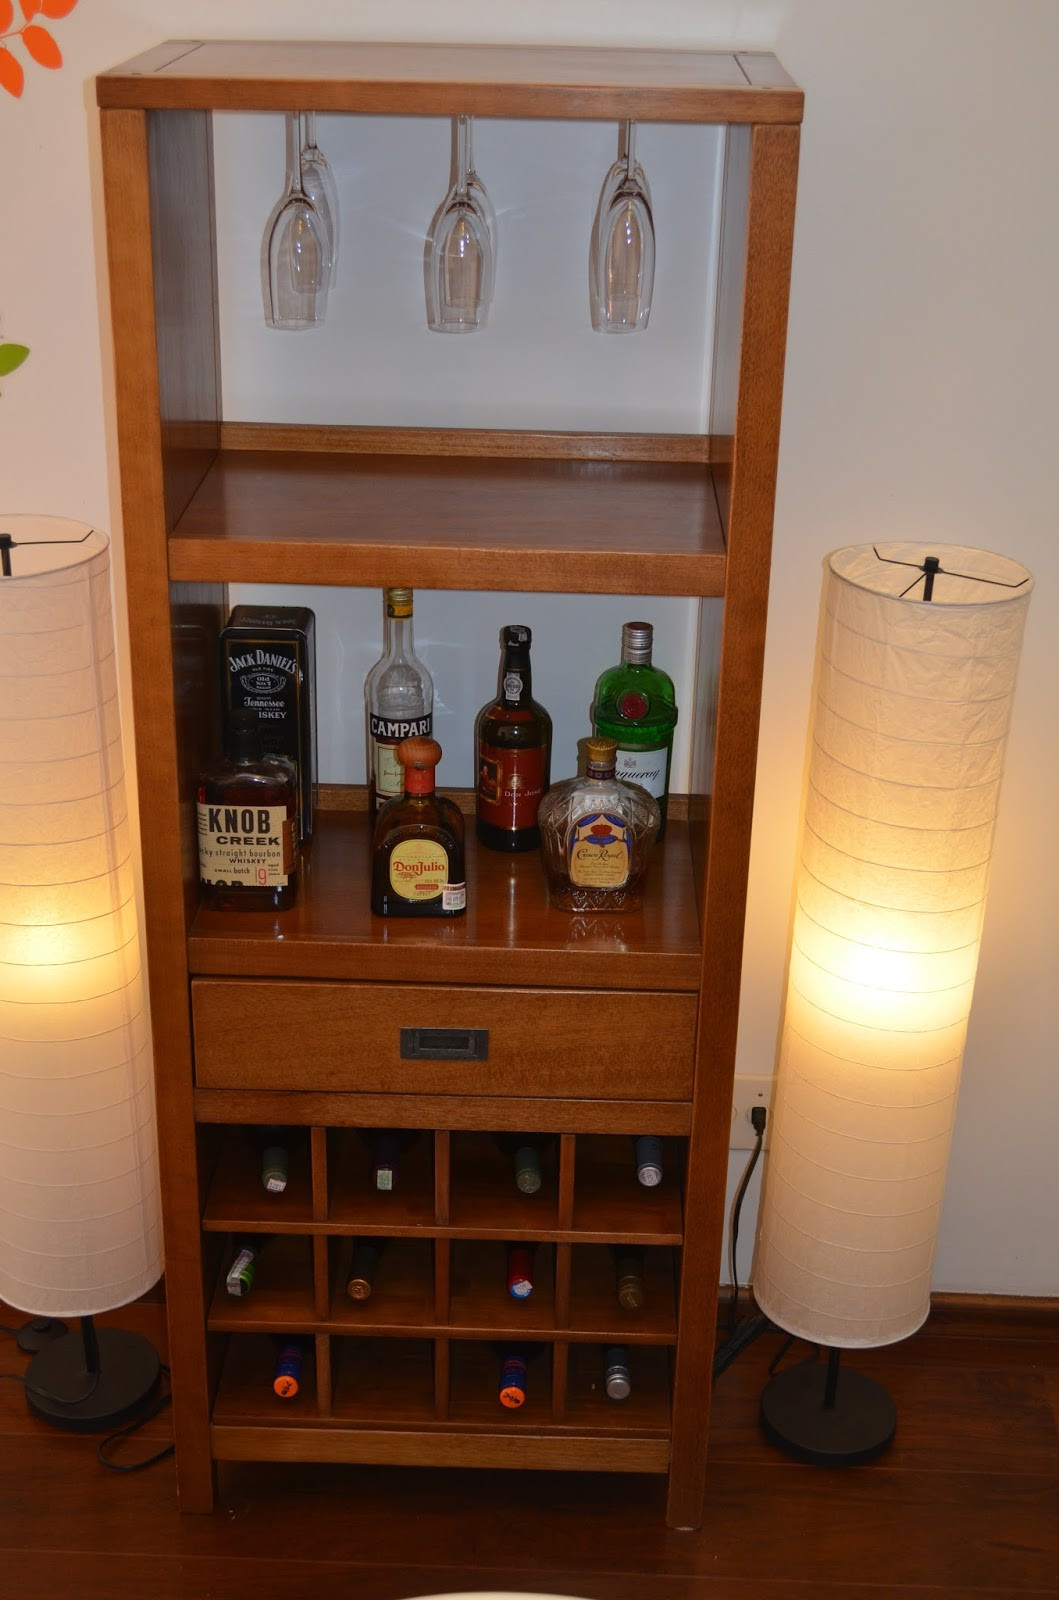 Best ideas about Liquor Cabinet Ikea
. Save or Pin Ikea Liquor Cabinet Now.